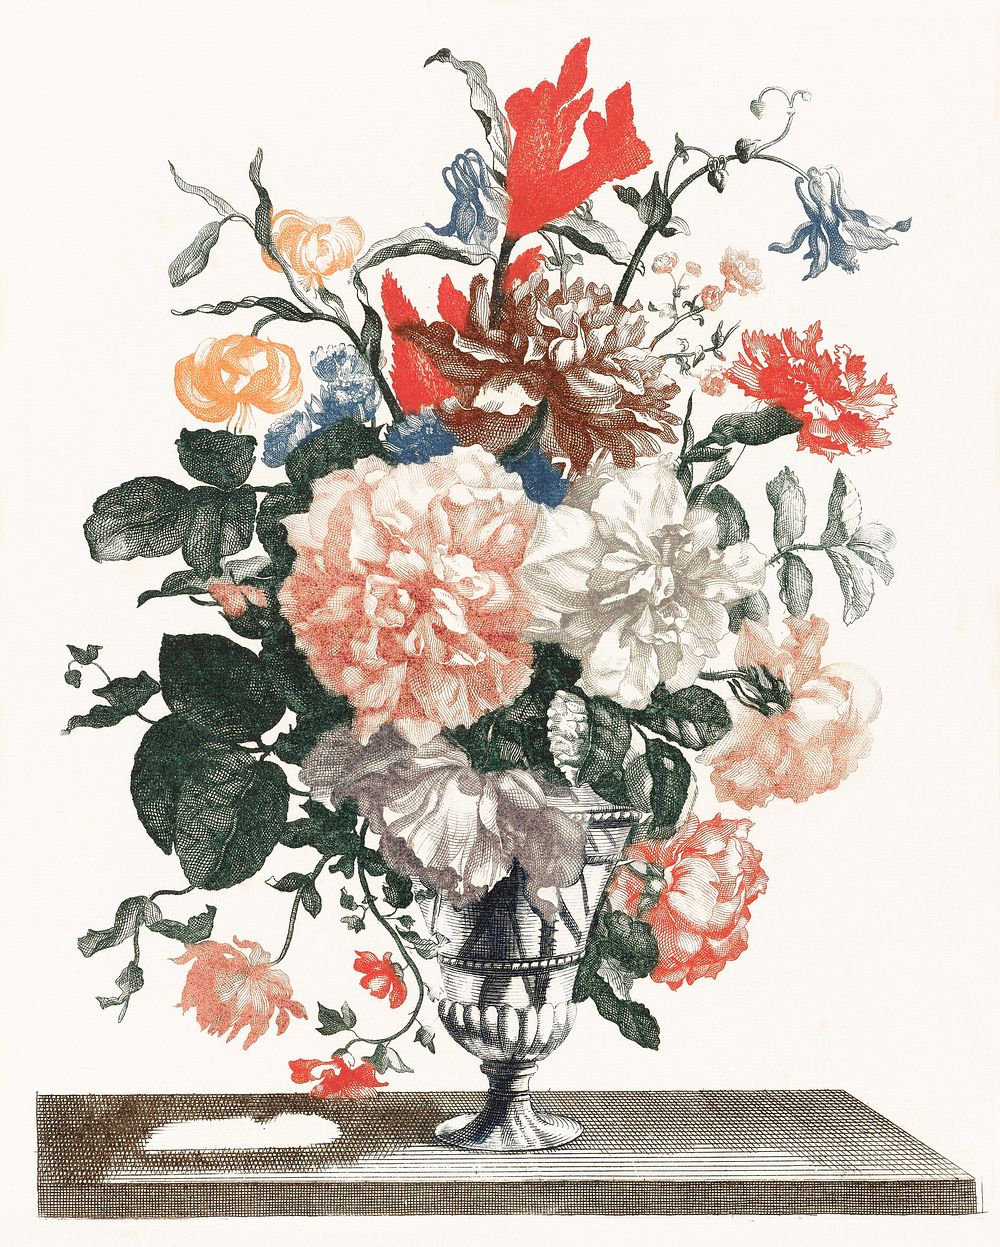 Flowers in a glass vase (1688-1698) by Johan Teyler (1648-1709). Original from The Rijksmuseum. Digitally enhanced by…